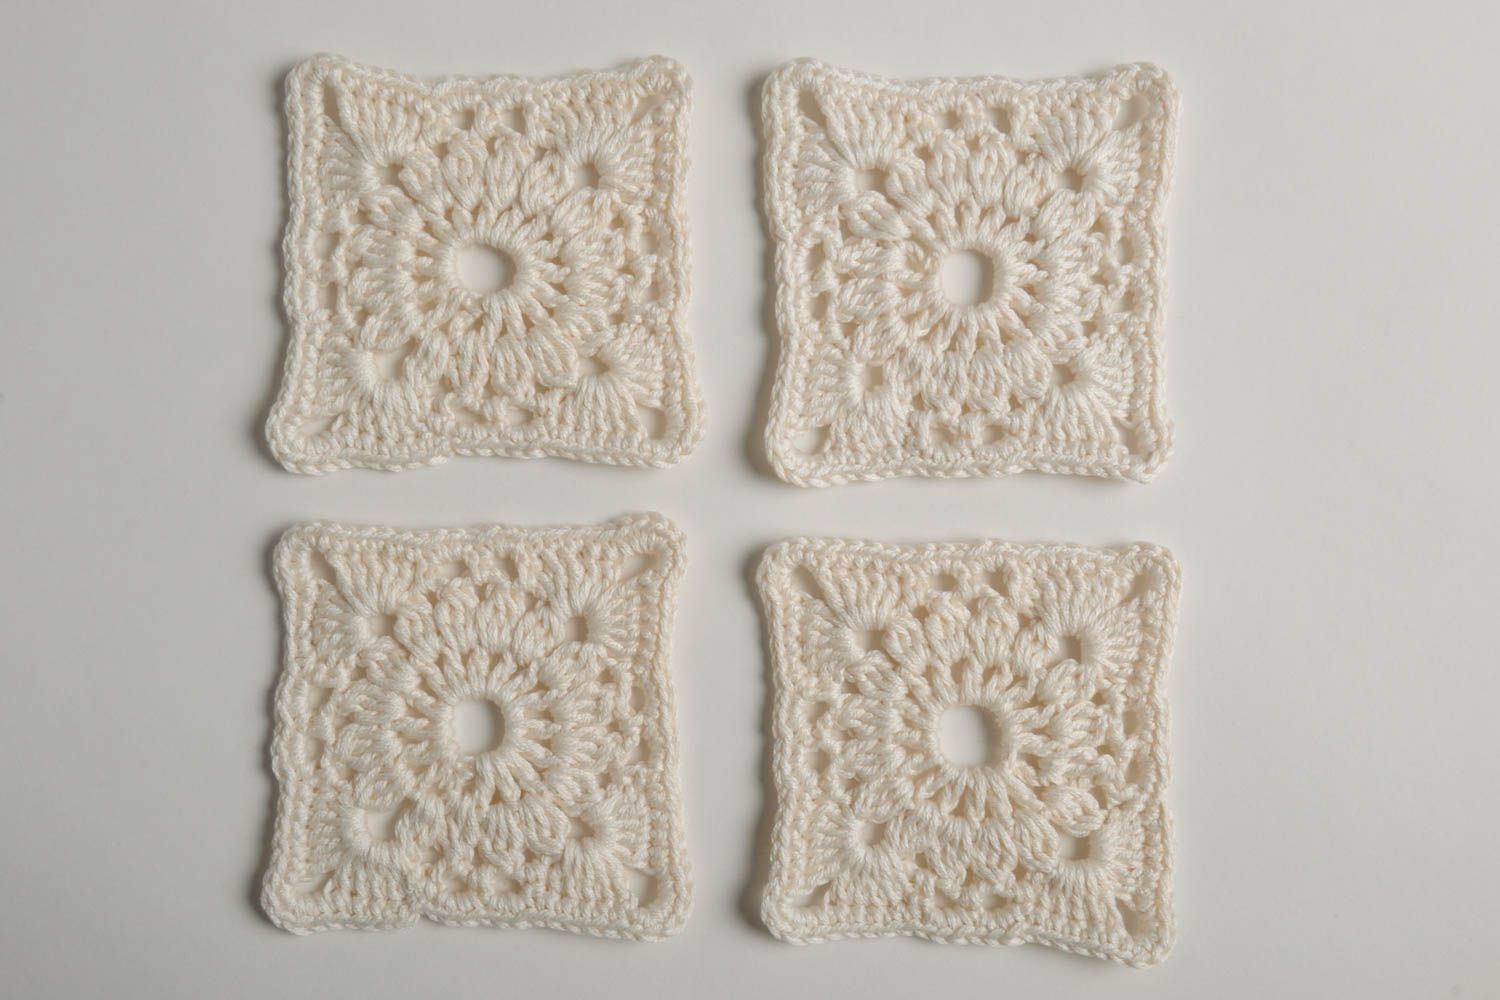 Unusual handmade hot pads decorative coaster crochet ideas kitchen design photo 2